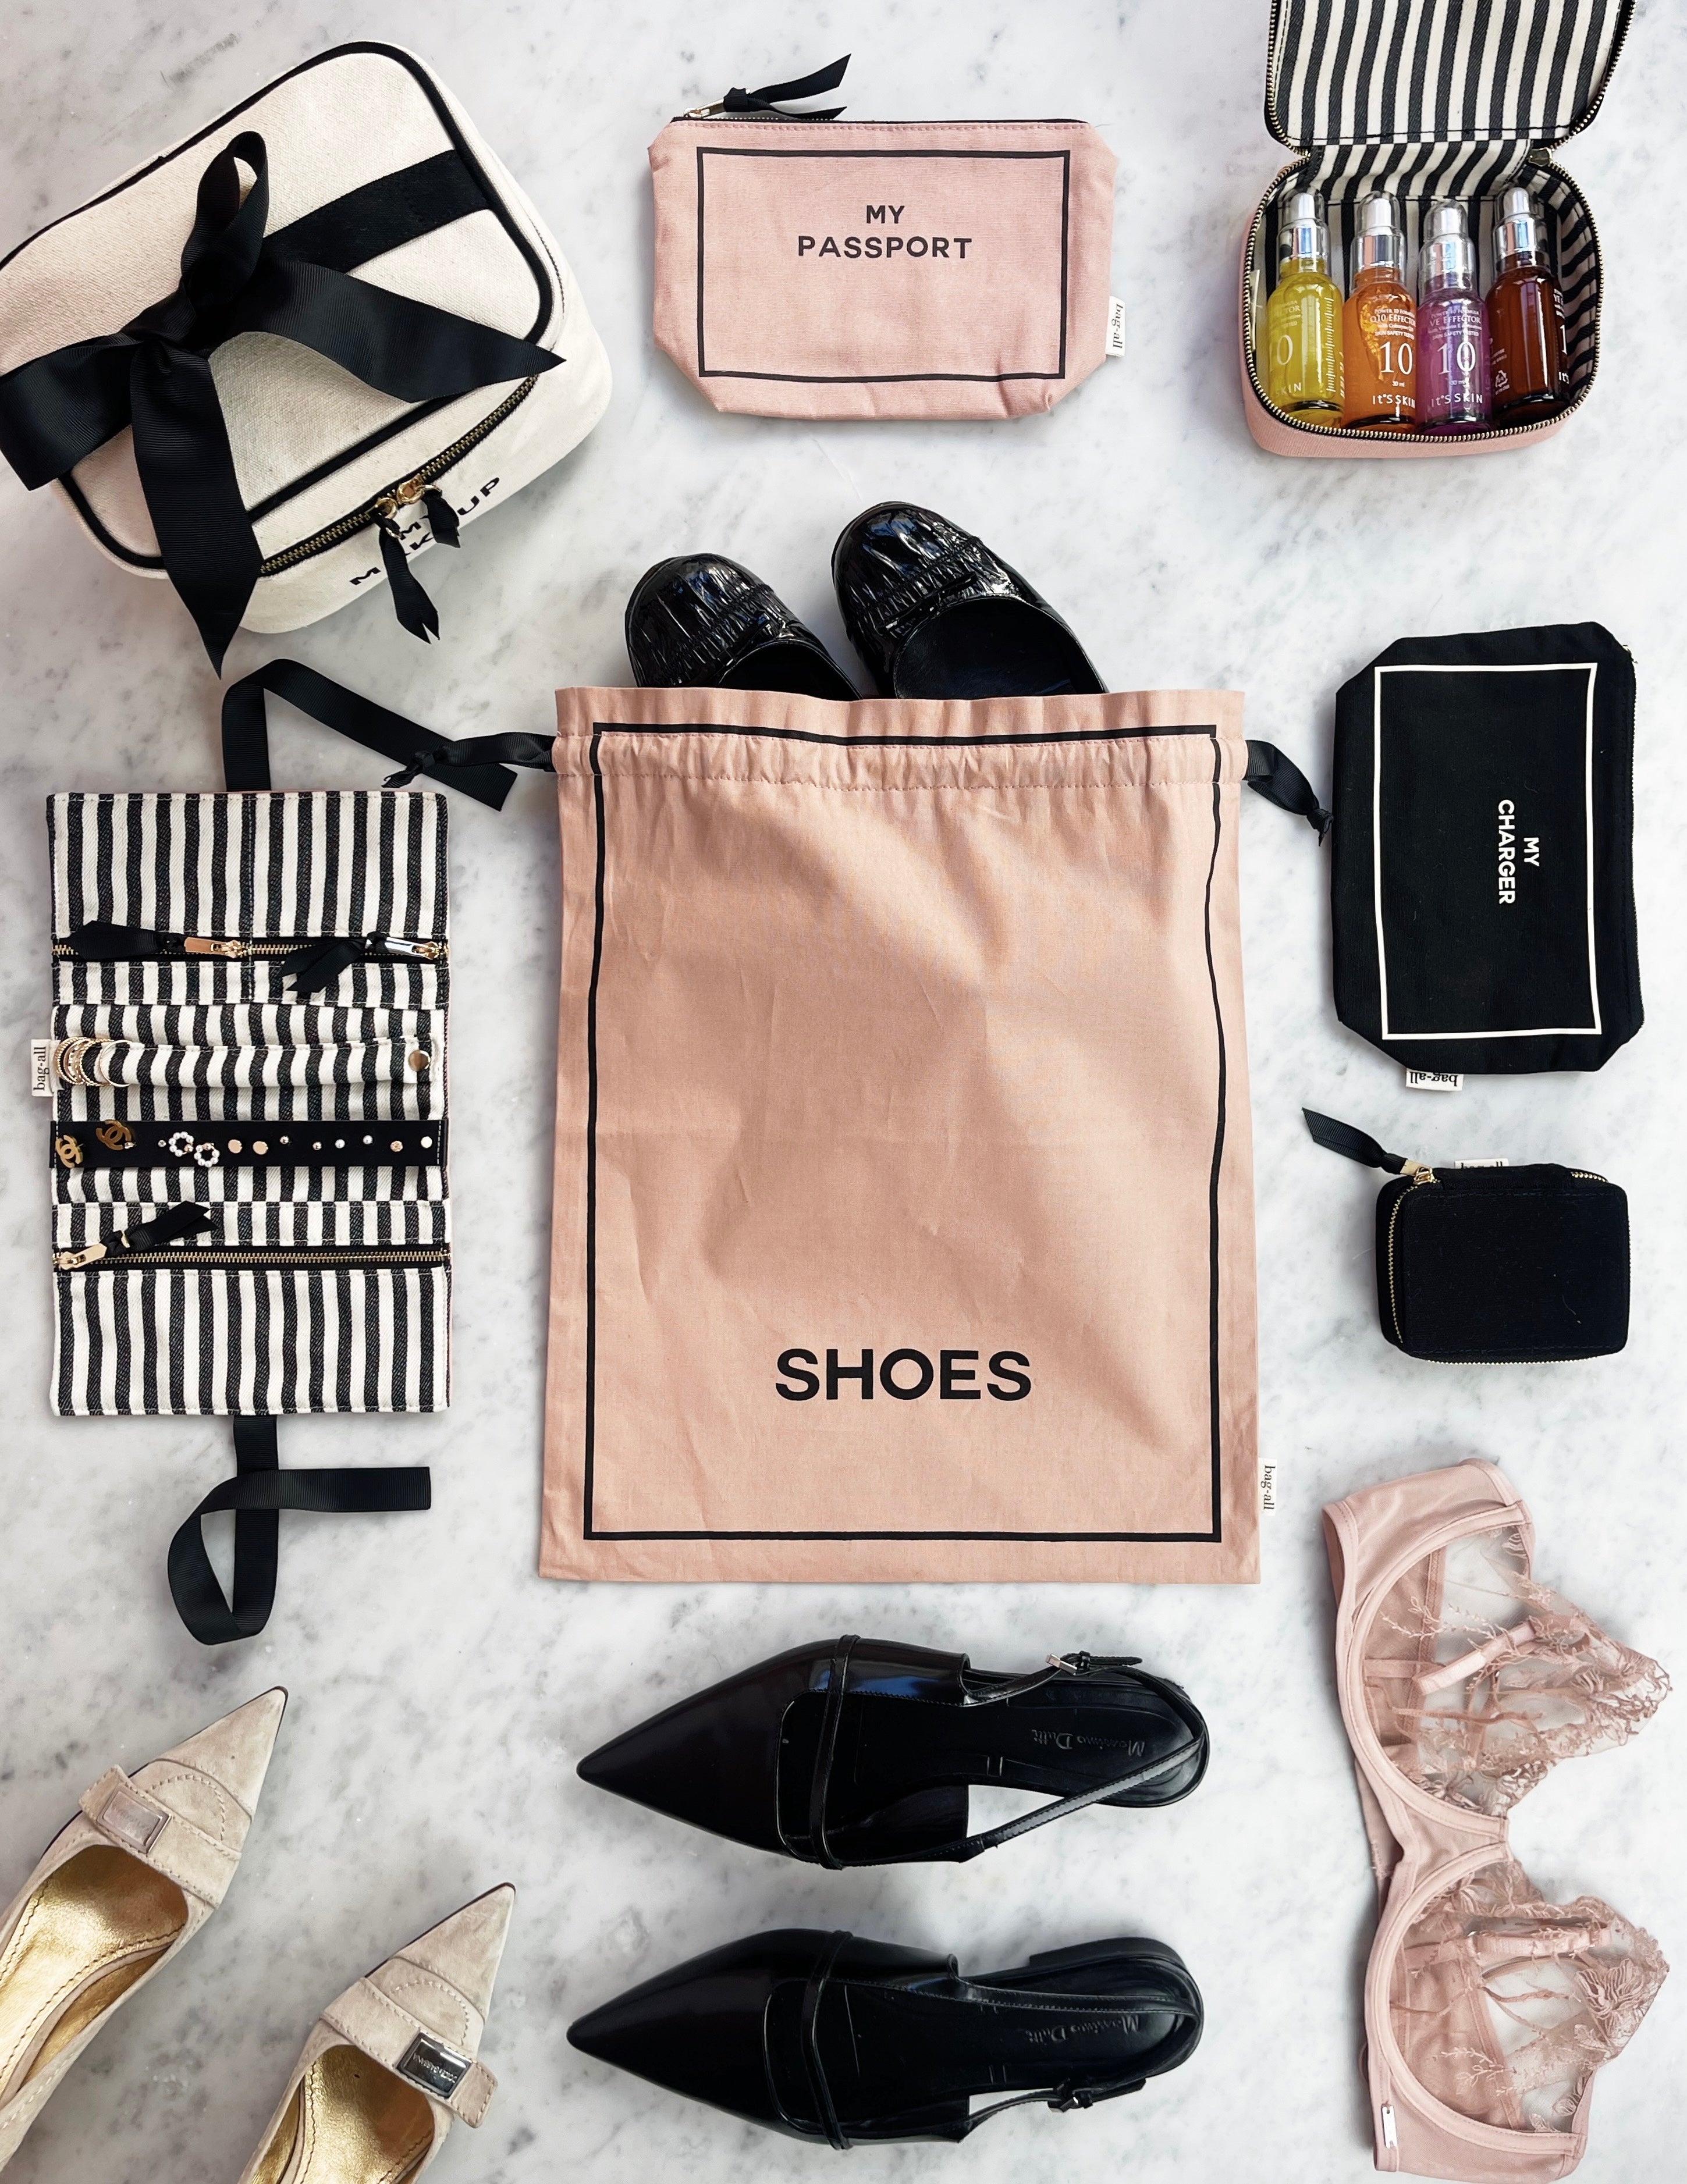 Sac de Chaussures "Shoe Organizing Bag", Rose Poudré | Bag-all Europe